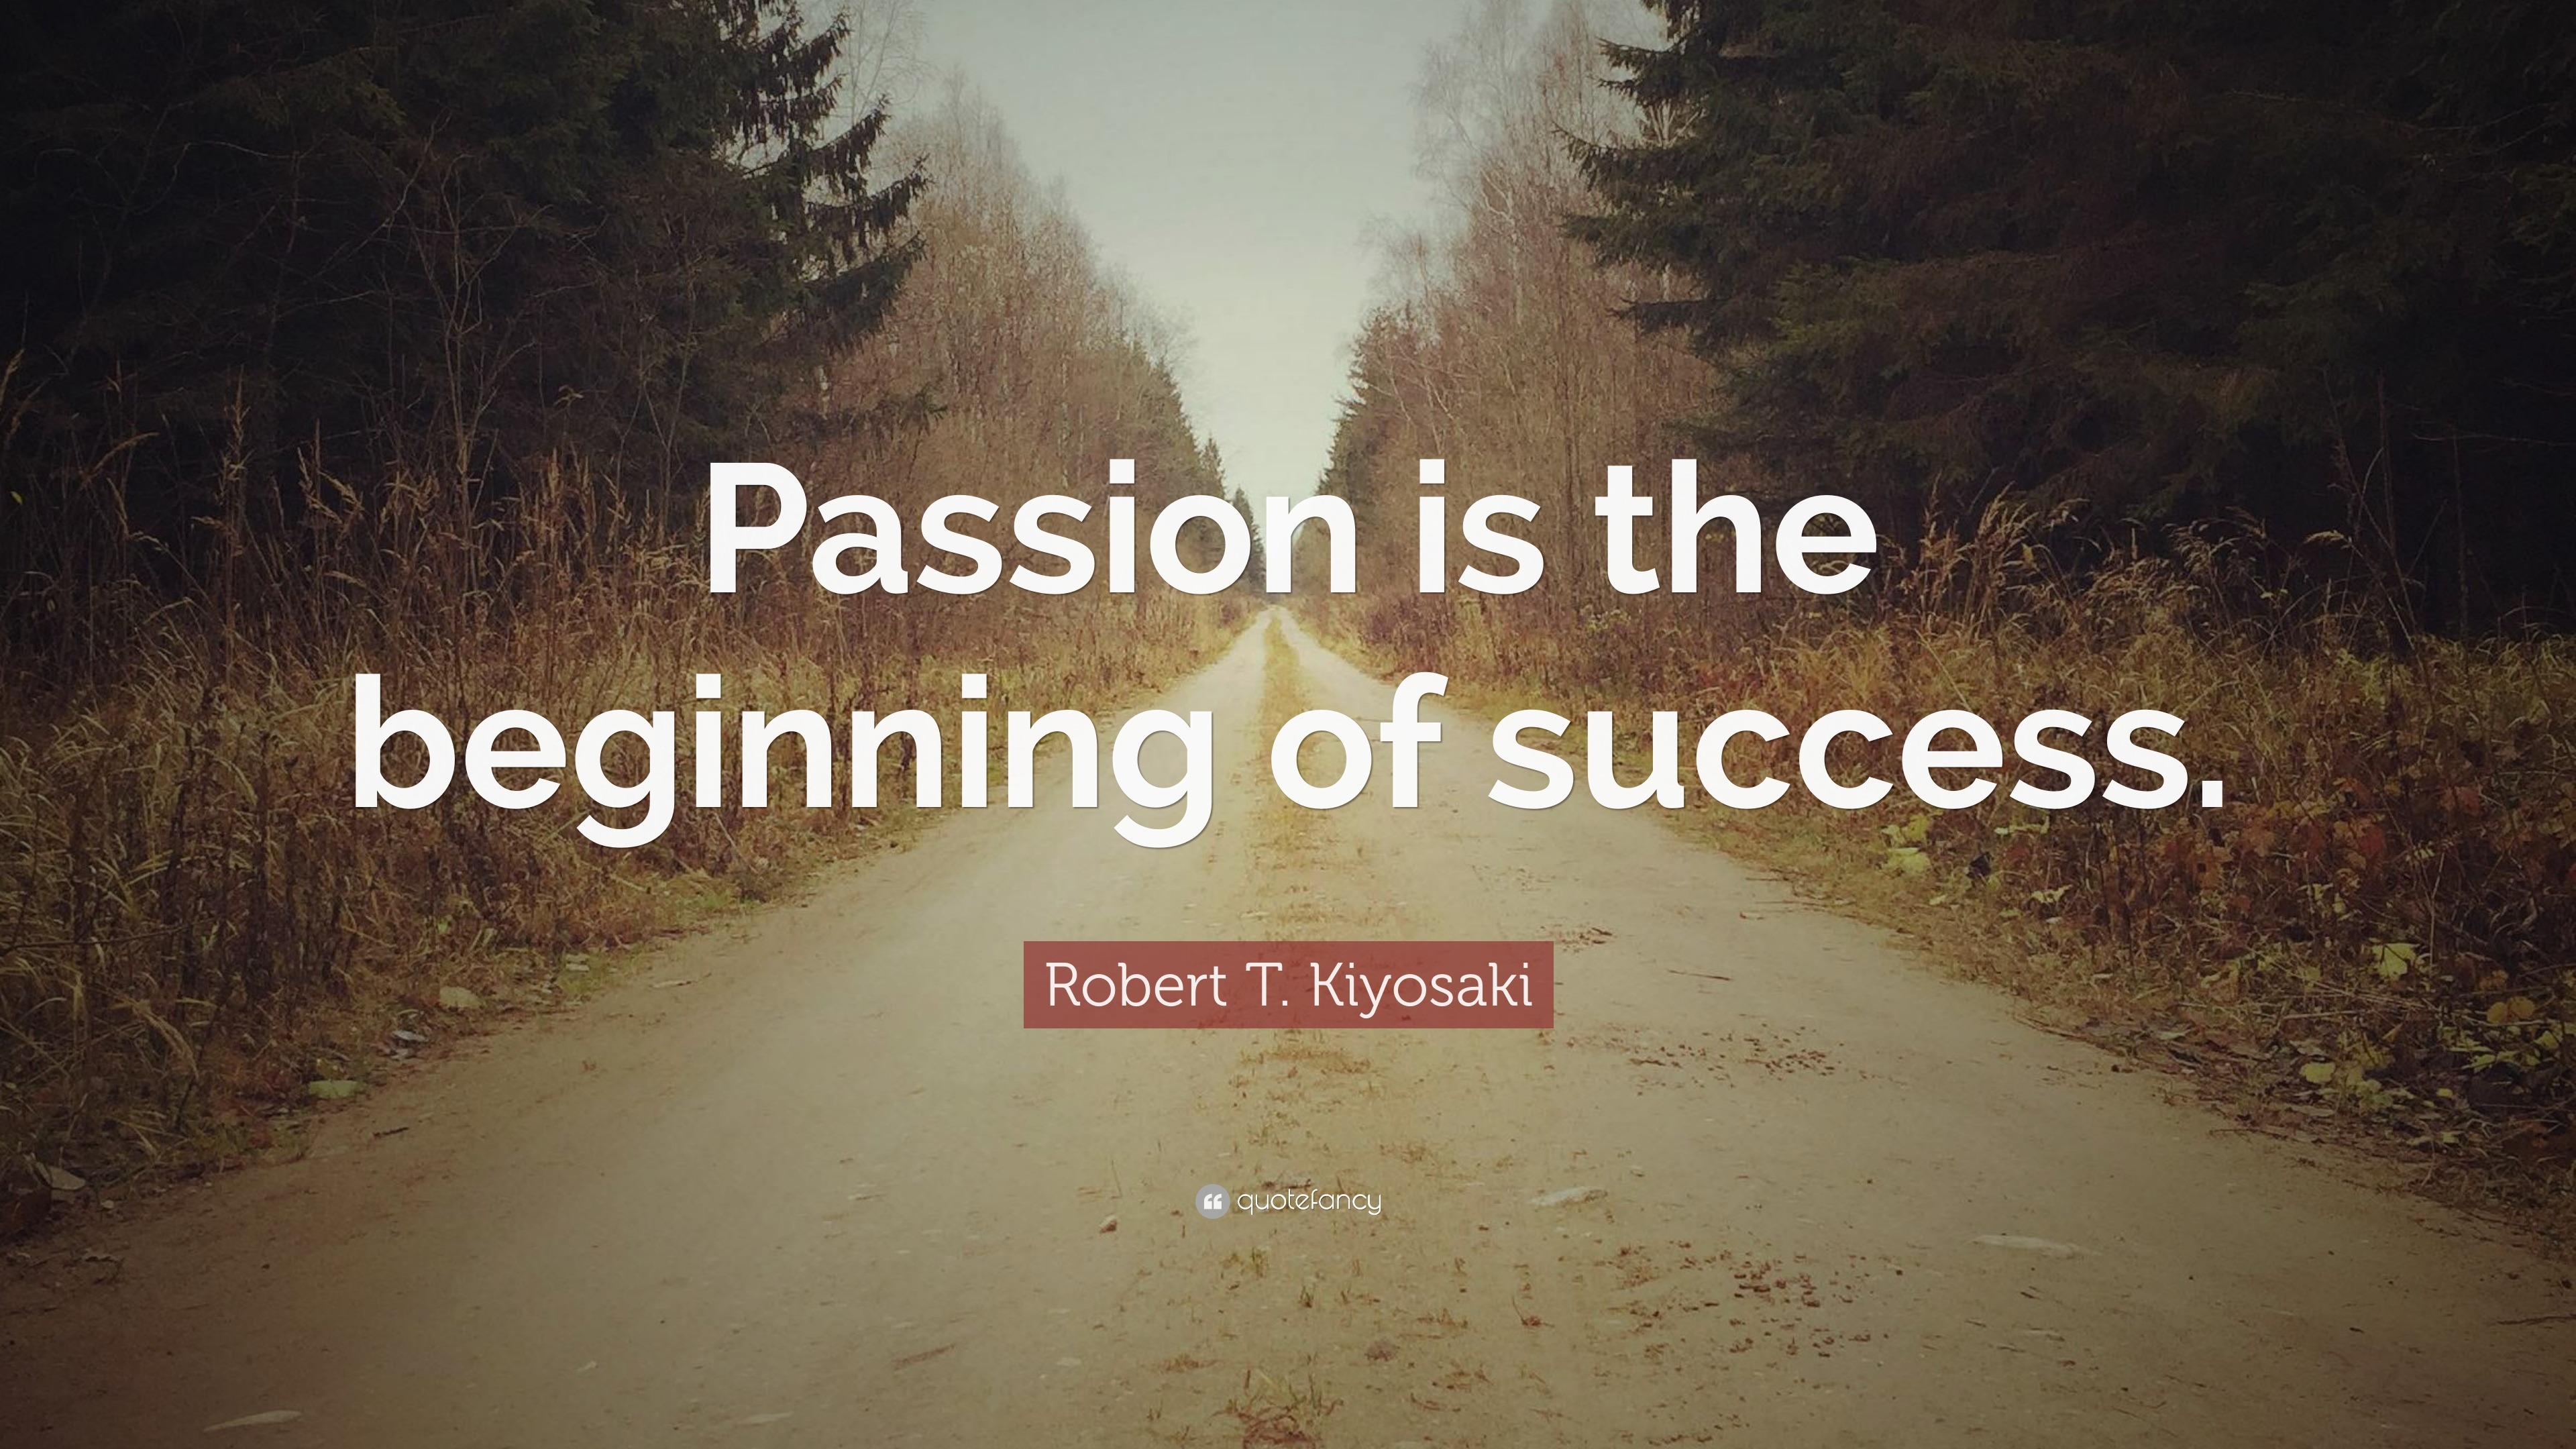 Robert T Kiyosaki Quote “passion Is The Beginning Of Success” 